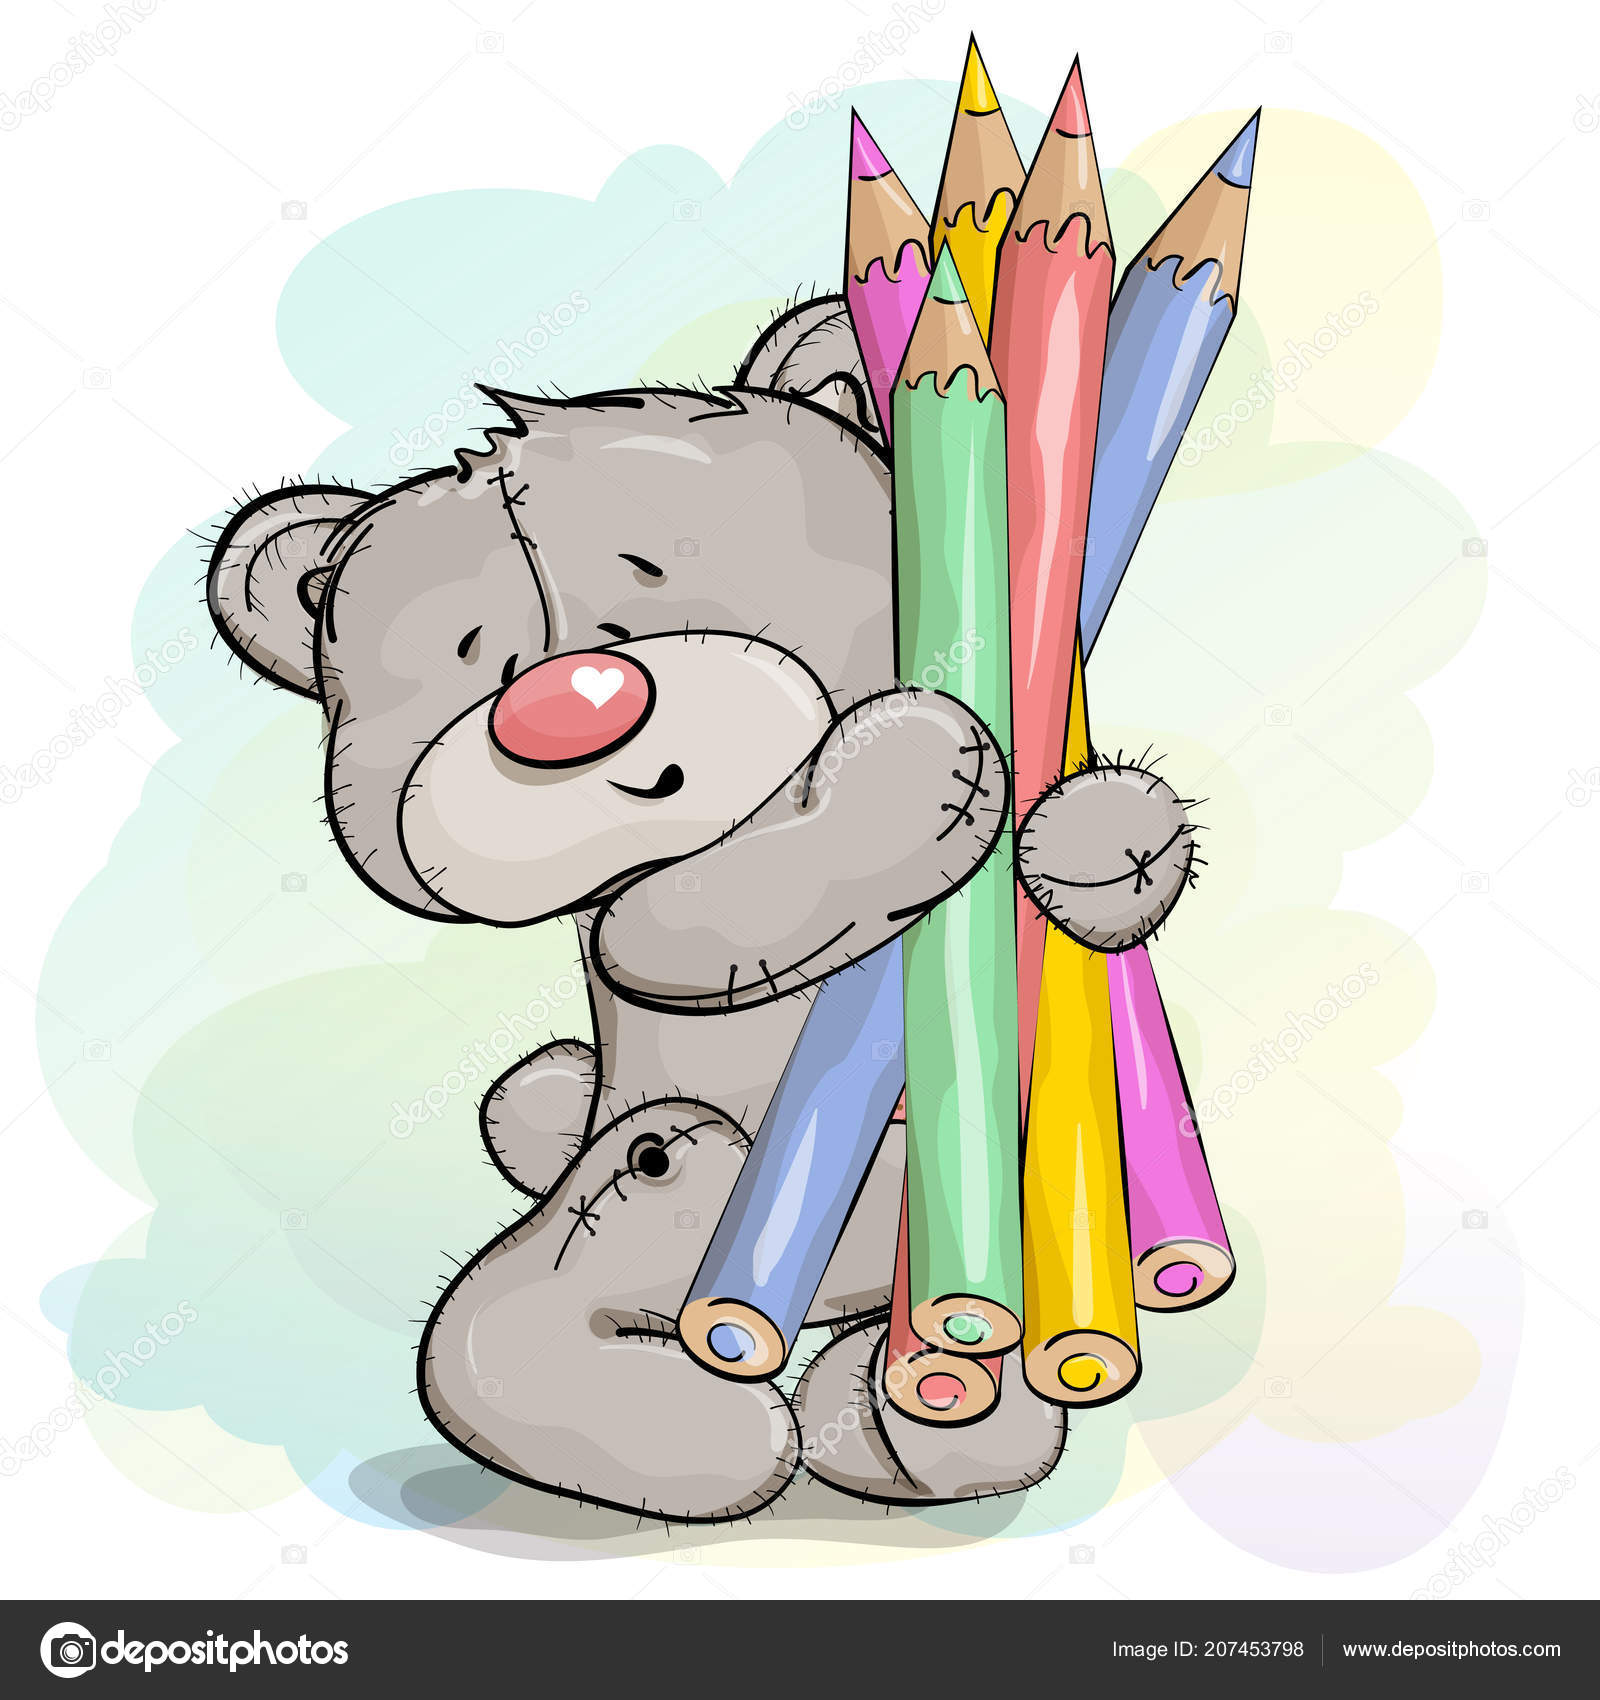 https://st4.depositphotos.com/2260429/20745/v/1600/depositphotos_207453798-stock-illustration-teddy-bear-holding-large-pencil.jpg